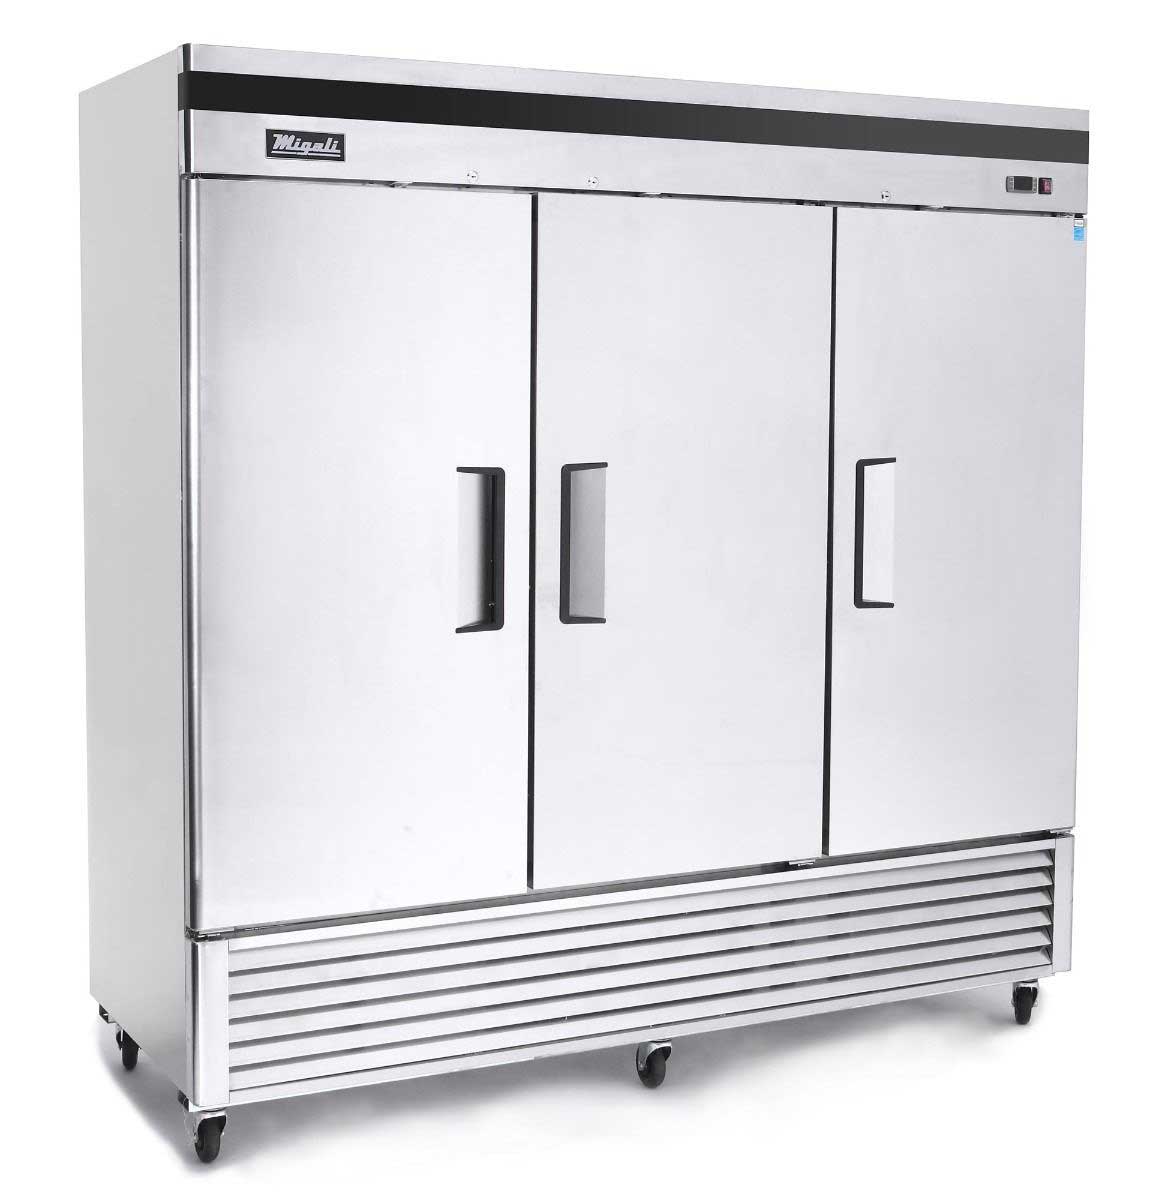 Migali Stainless Steel 3 Door Reach-In Freezer with 9 Adjustable Shelves, 81.9 inch Width x 31.5 inch Depth x 83.2 inch Height